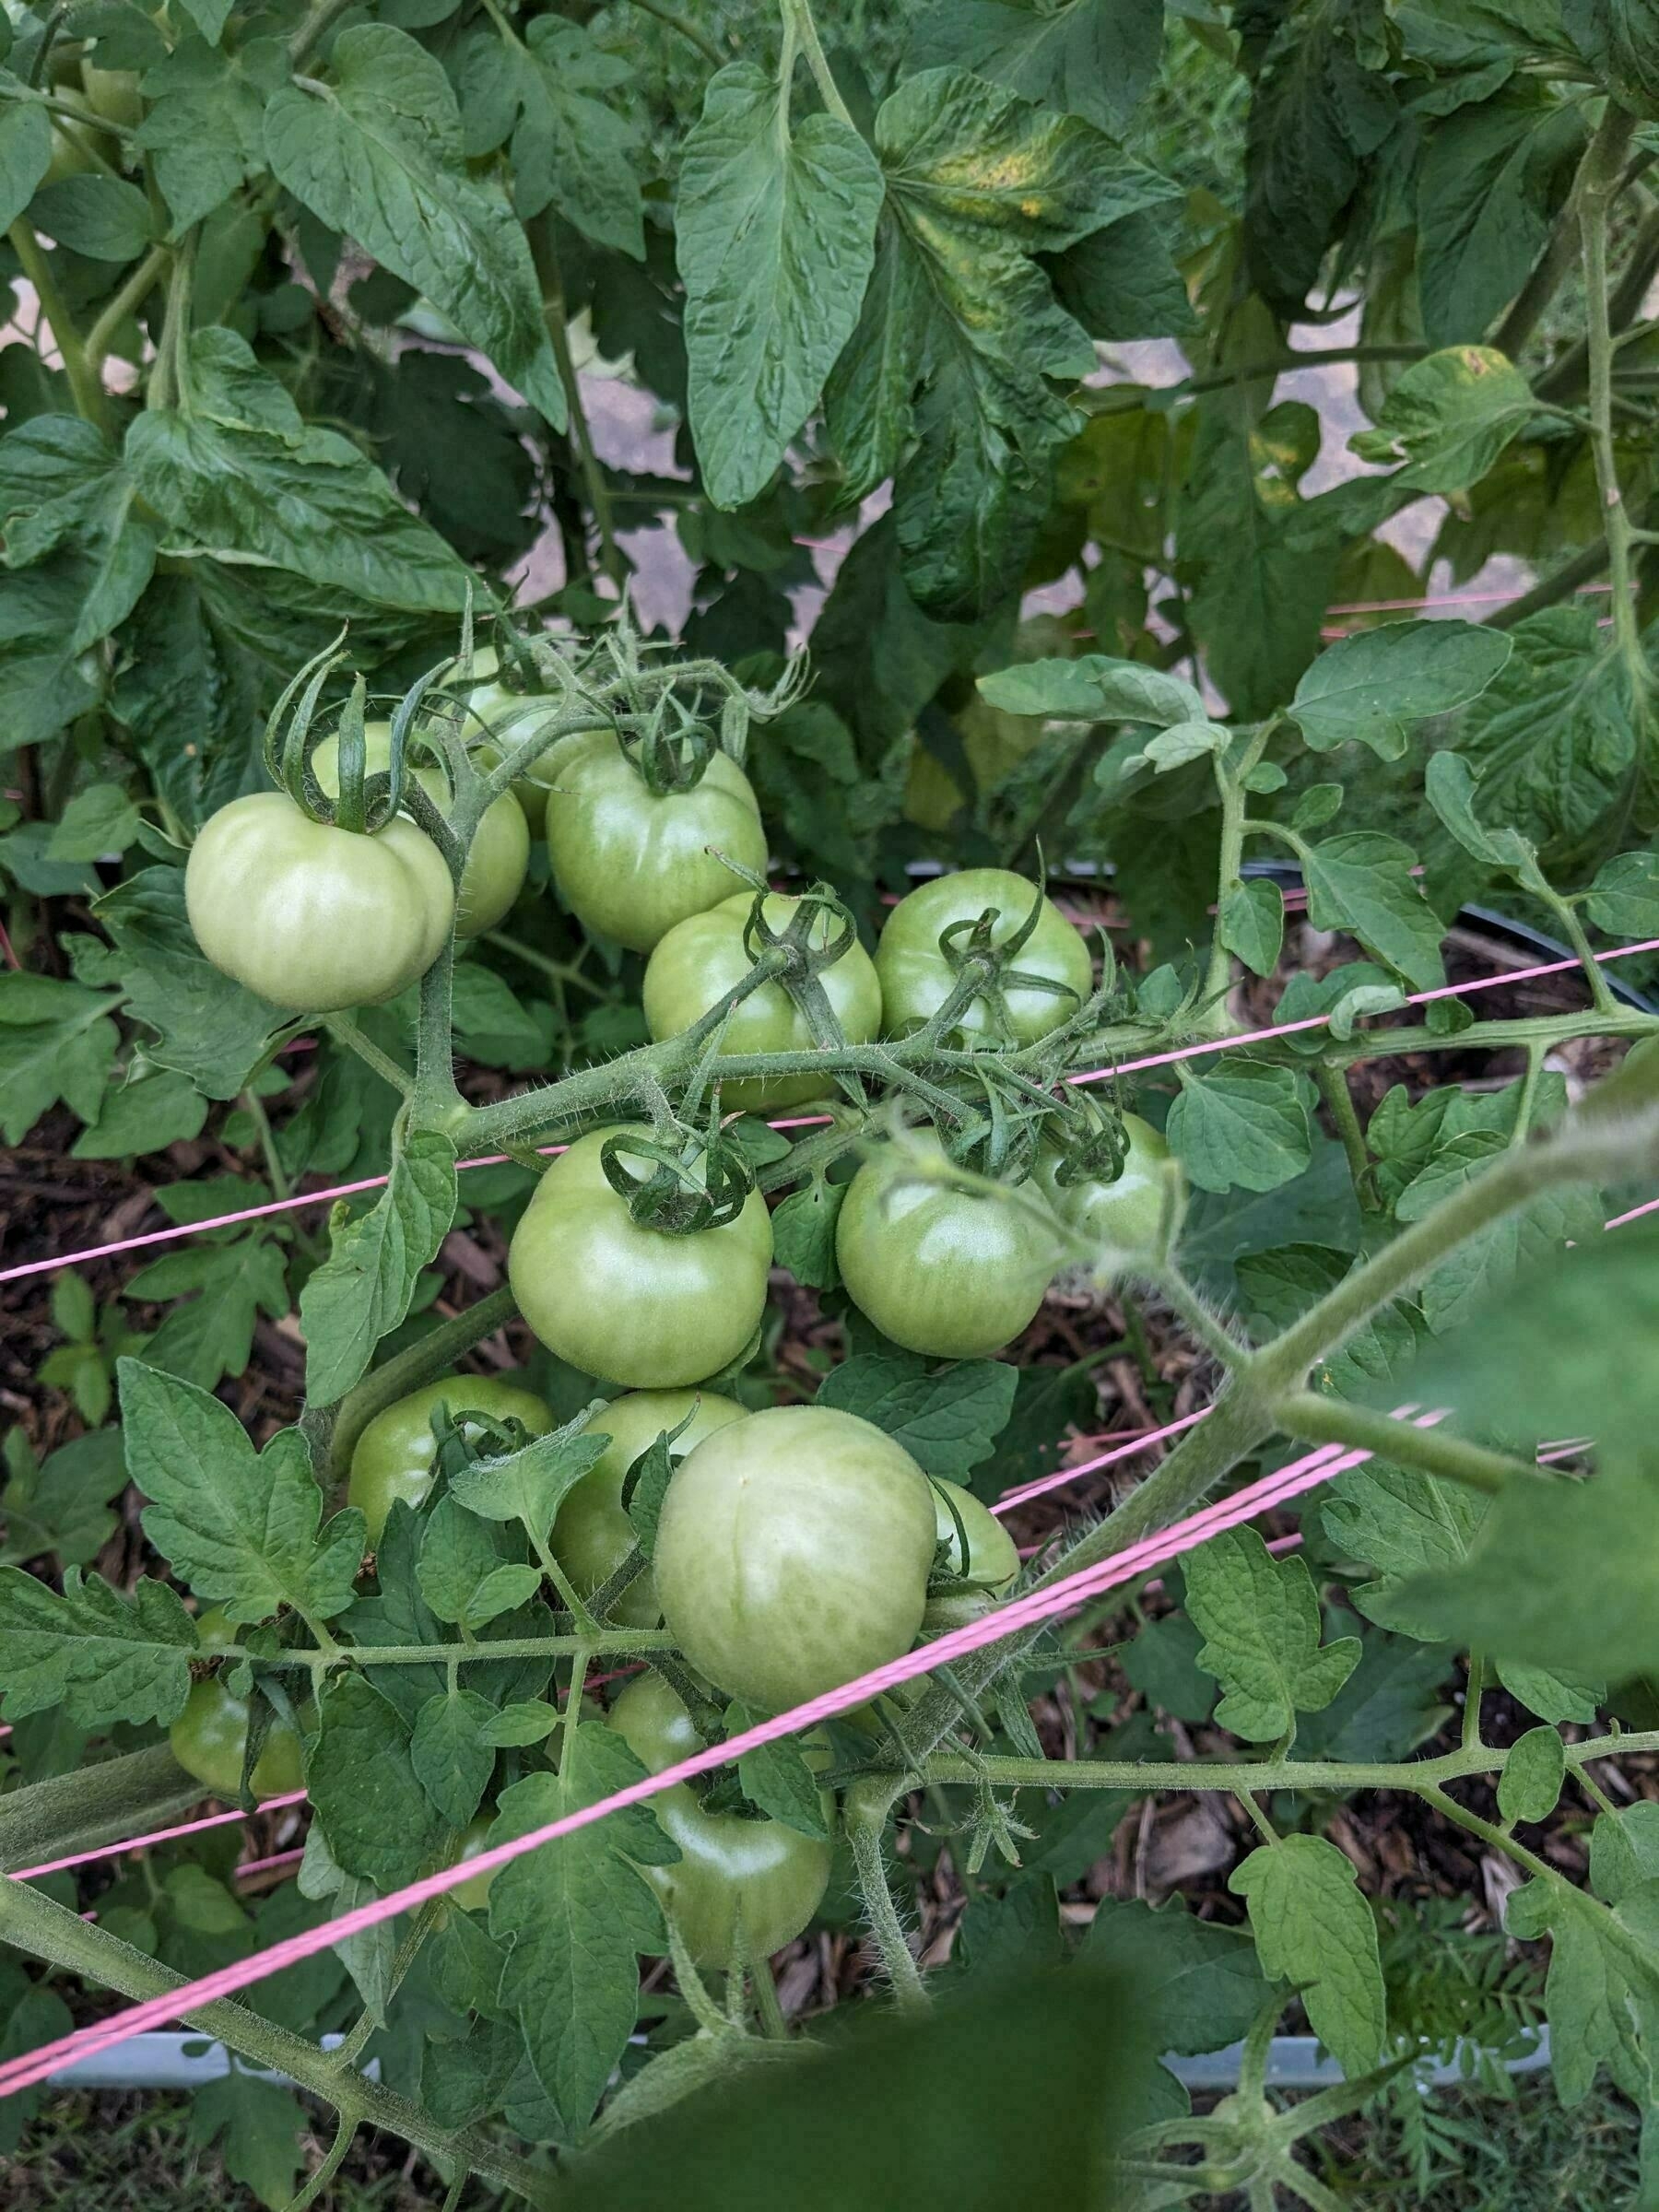 Unripe green tomatoes on the vine.